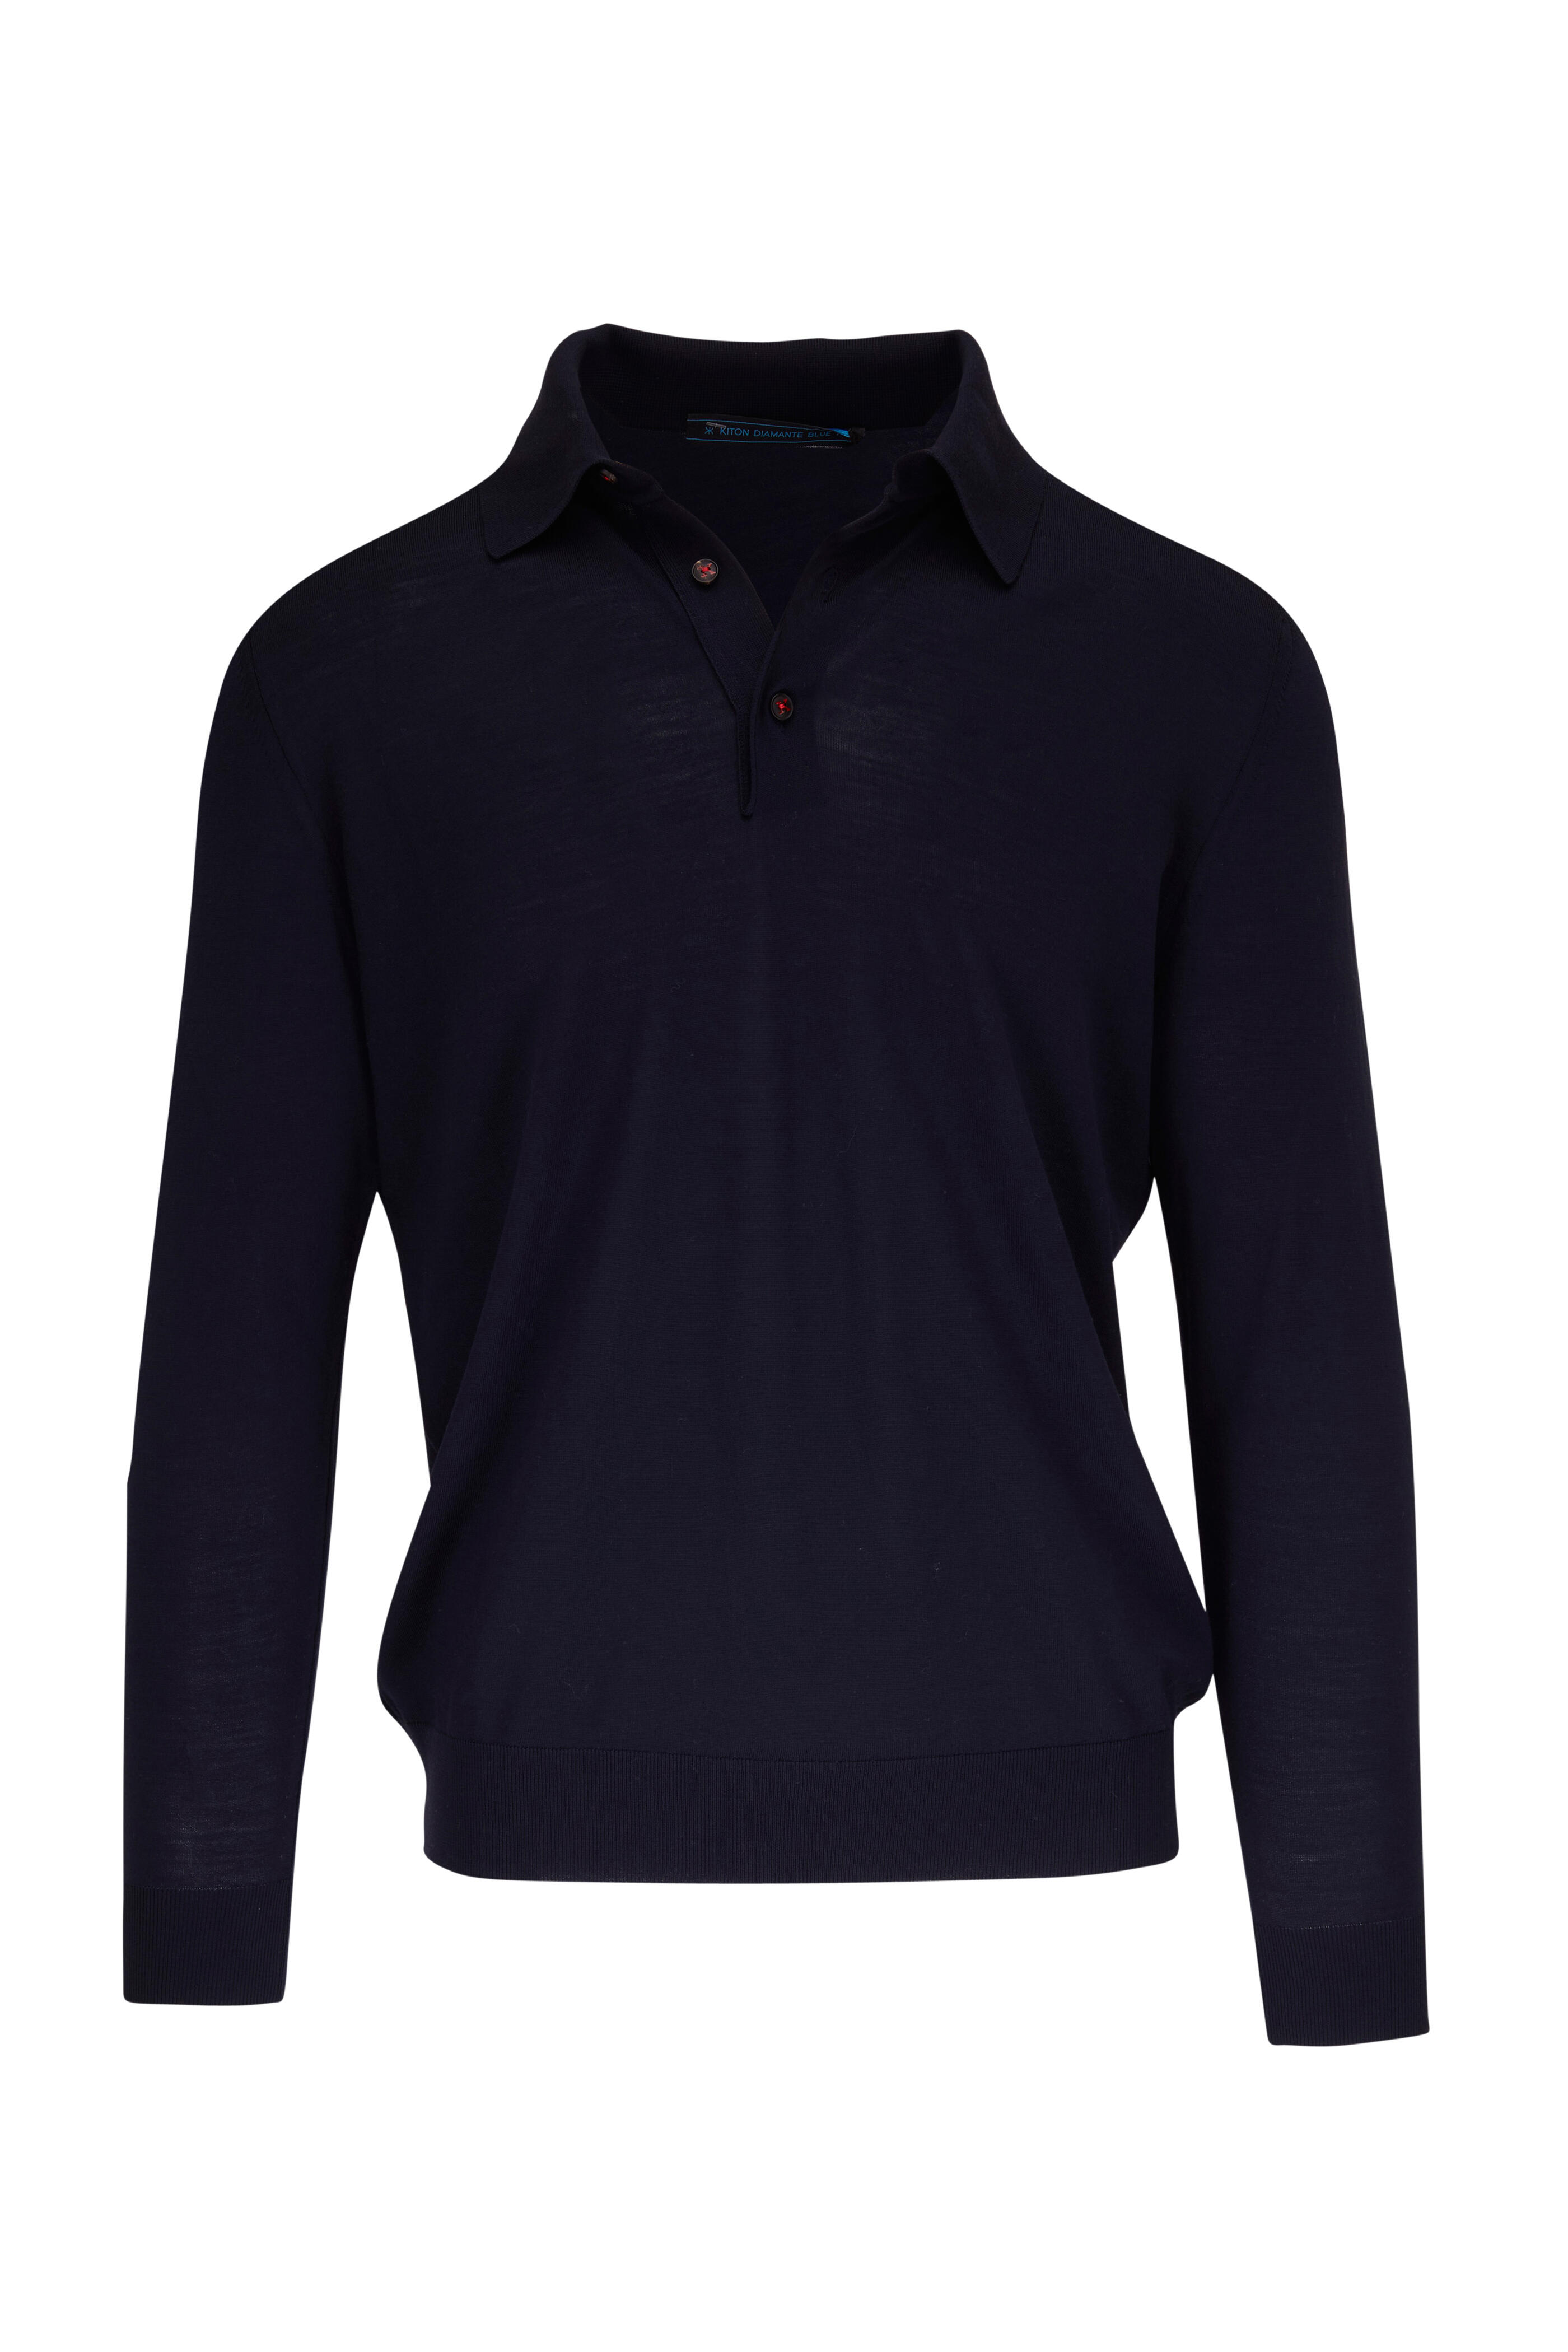 Kiton - Navy Long Sleeve Polo | Mitchell Stores